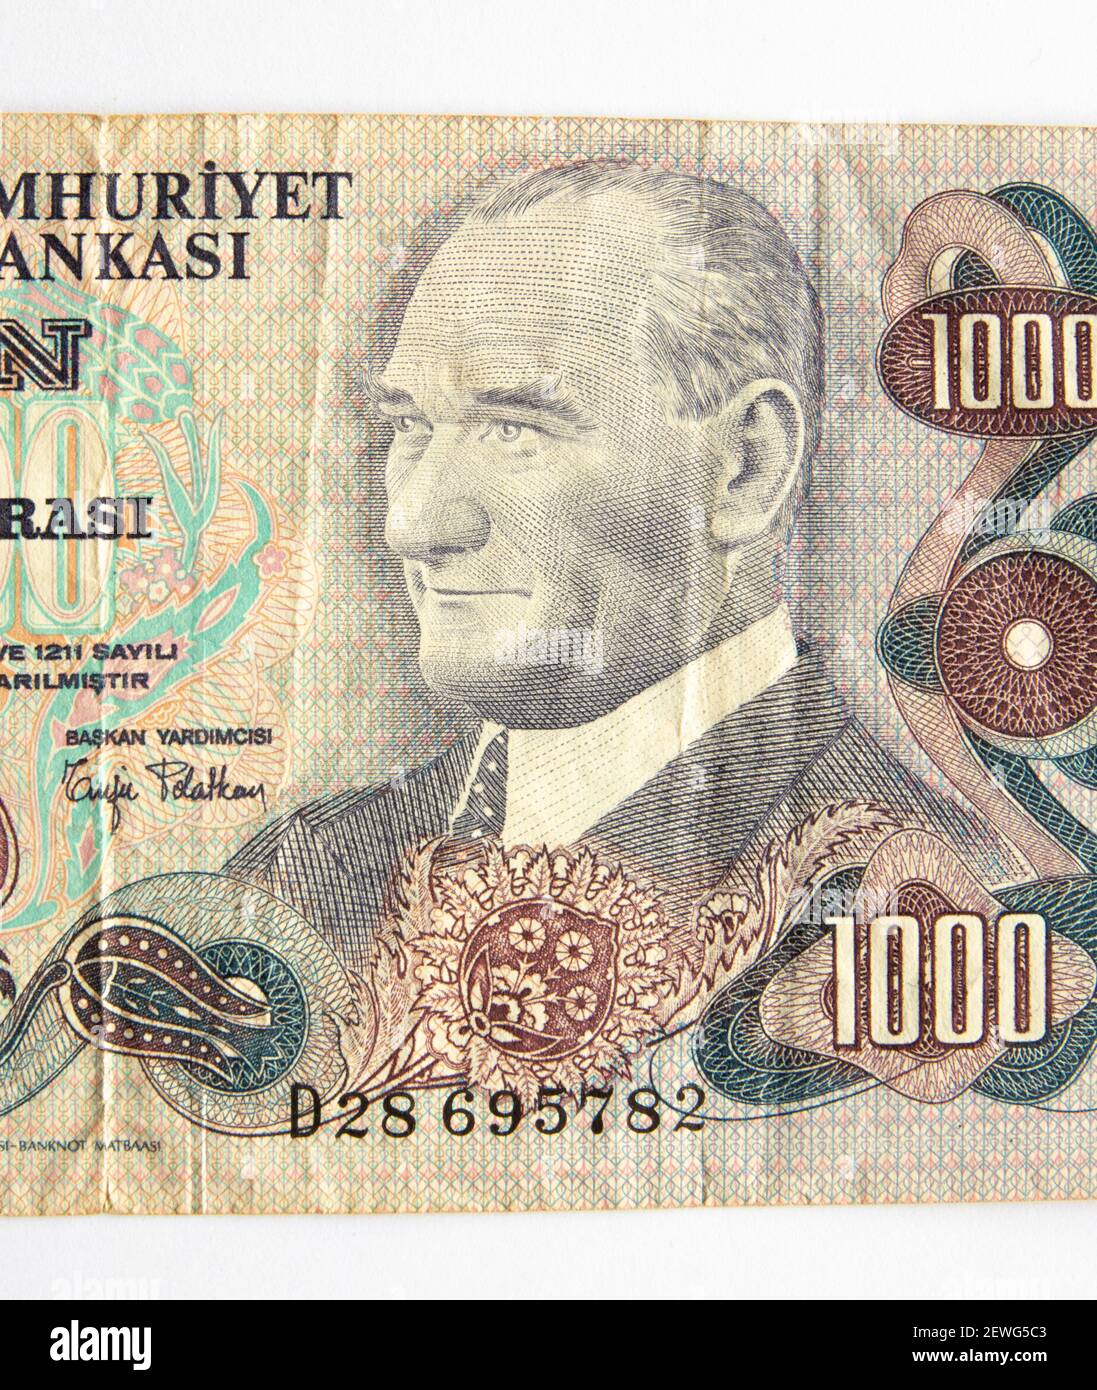 the most beautiful Turkish money and the most beautiful person's portrait on it. Mustafa Kemal Atatürk. Founder of the modern Republic of Turkey Stock Photo